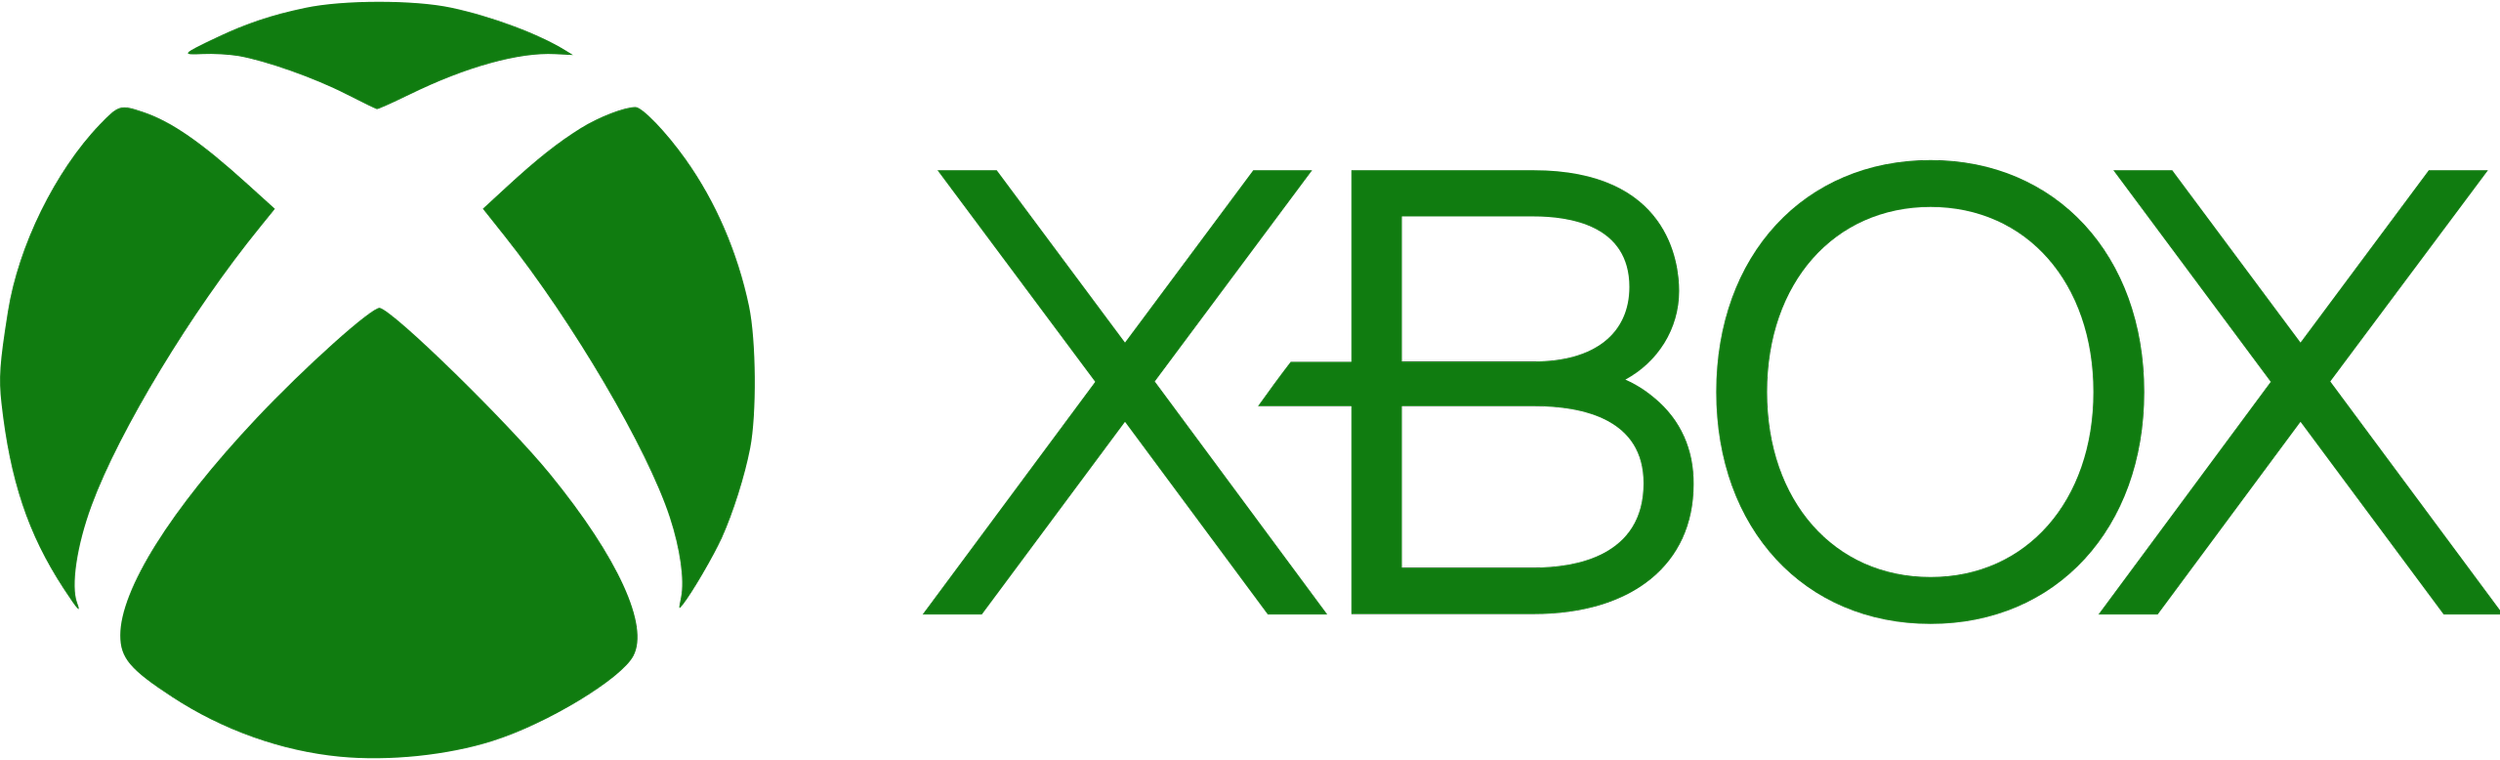 2560px-XBOX_logo_2012.svg.png